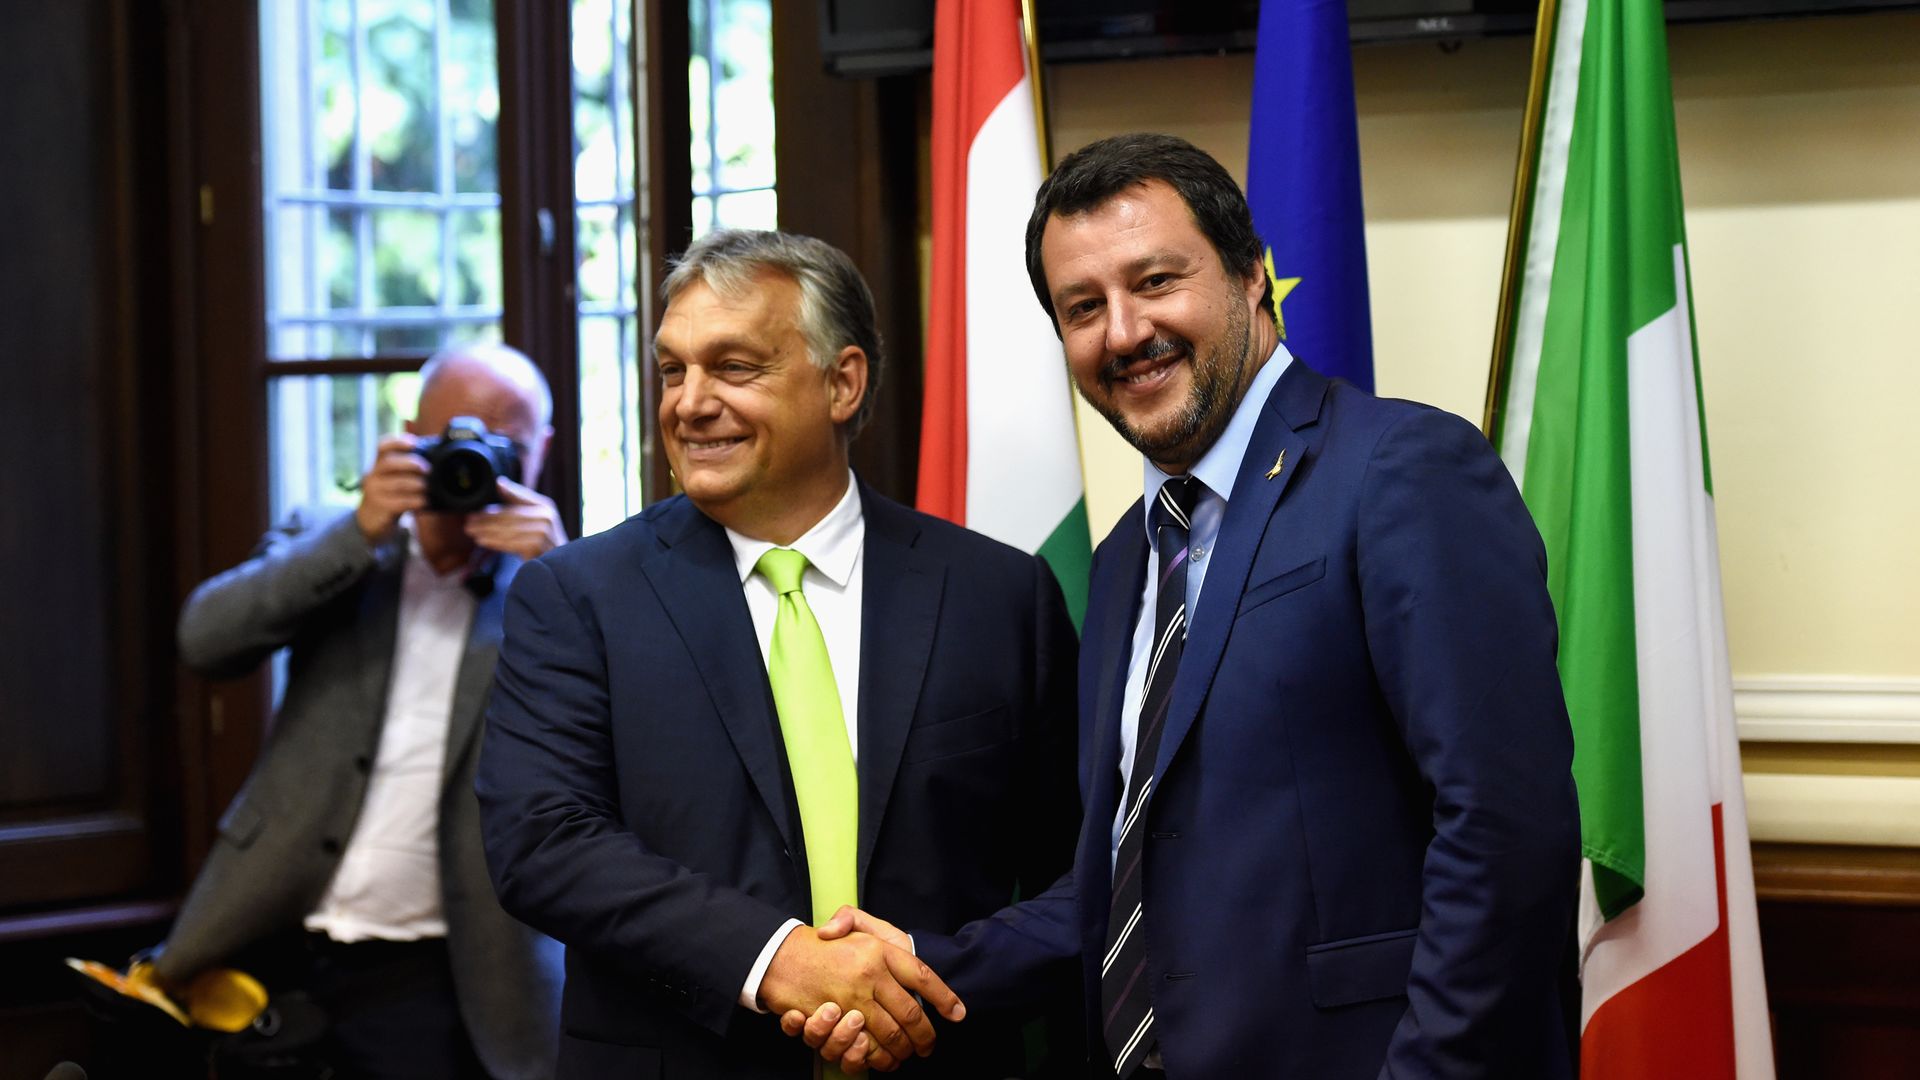 Viktor Orban and Matteo Salvini shaking hands